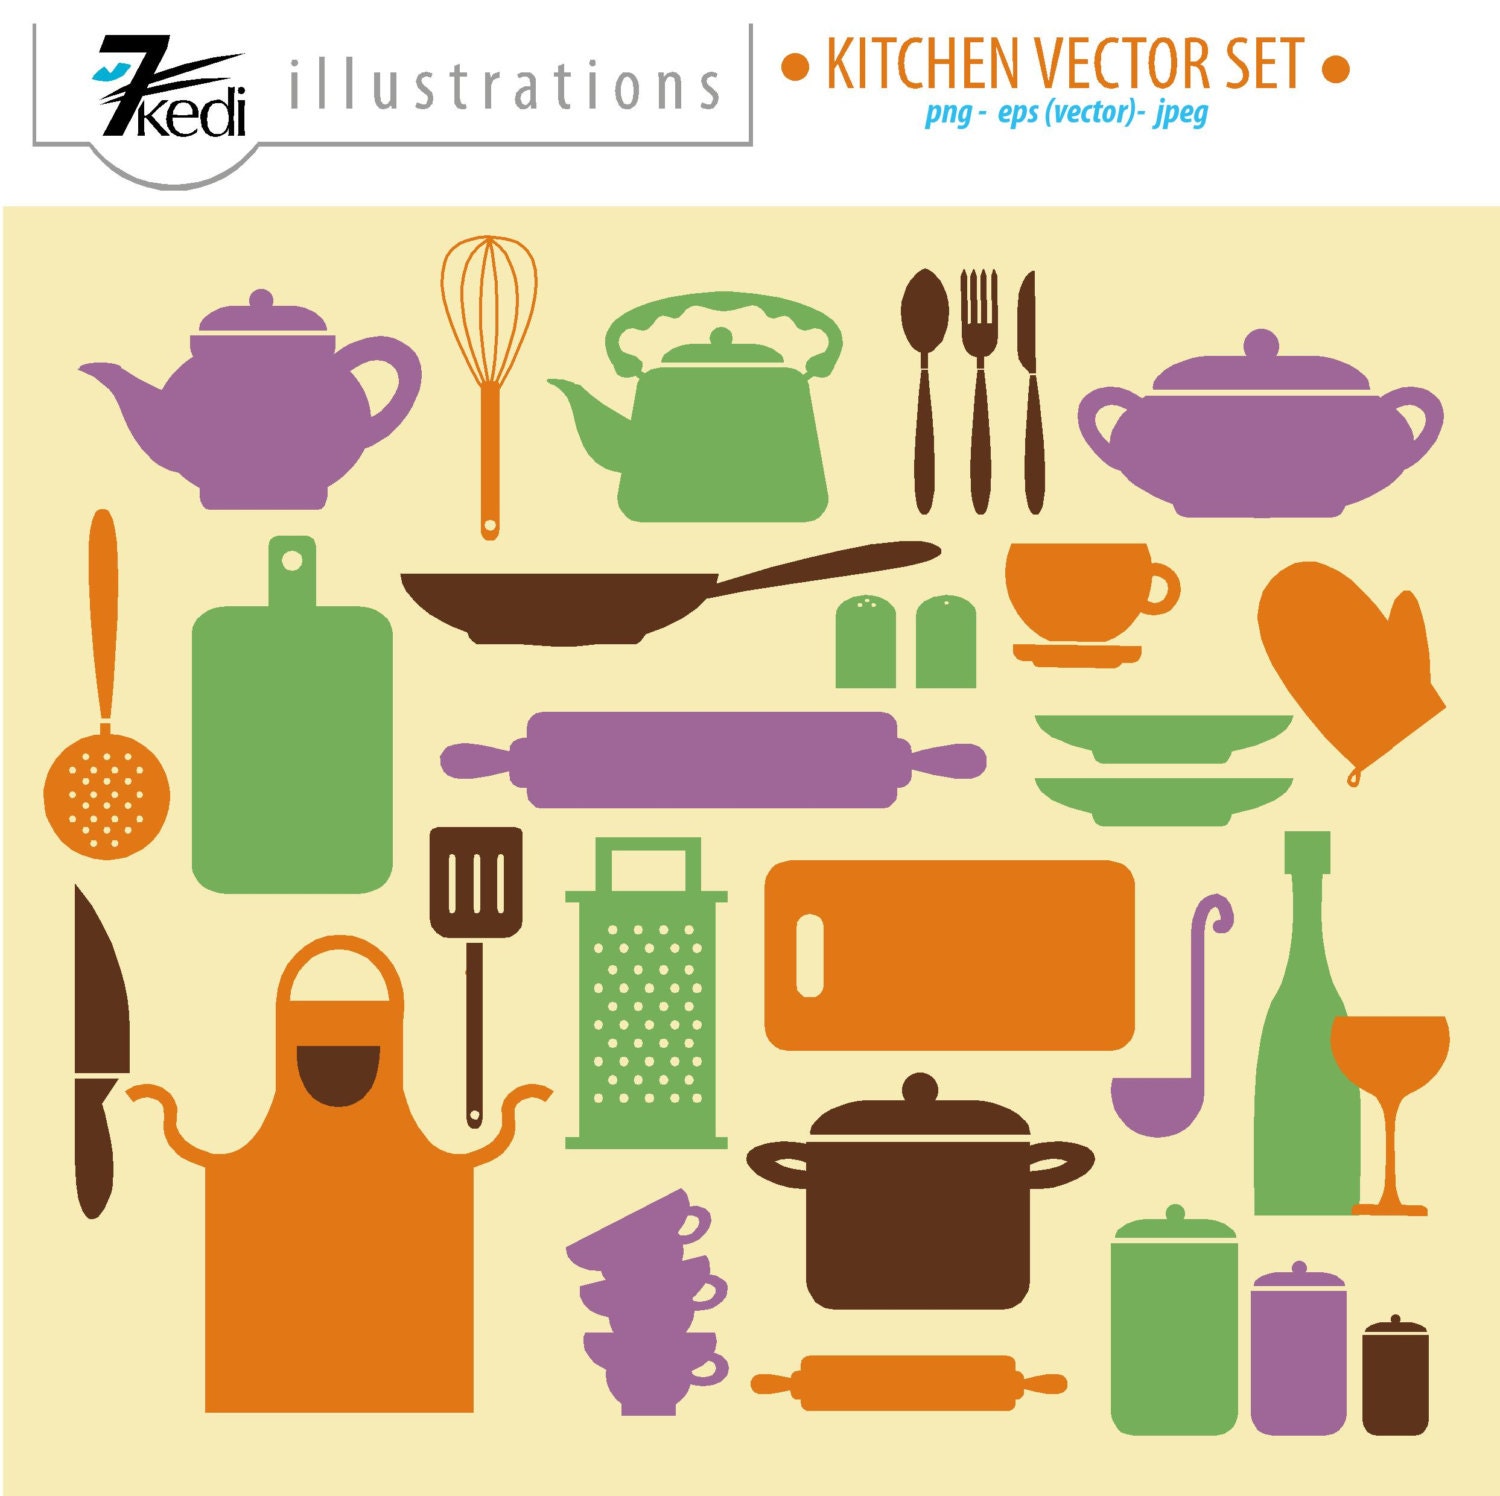 Vector Kitchen Set  Kitchen Clip  Art  kitchen graphics  by 7kedi